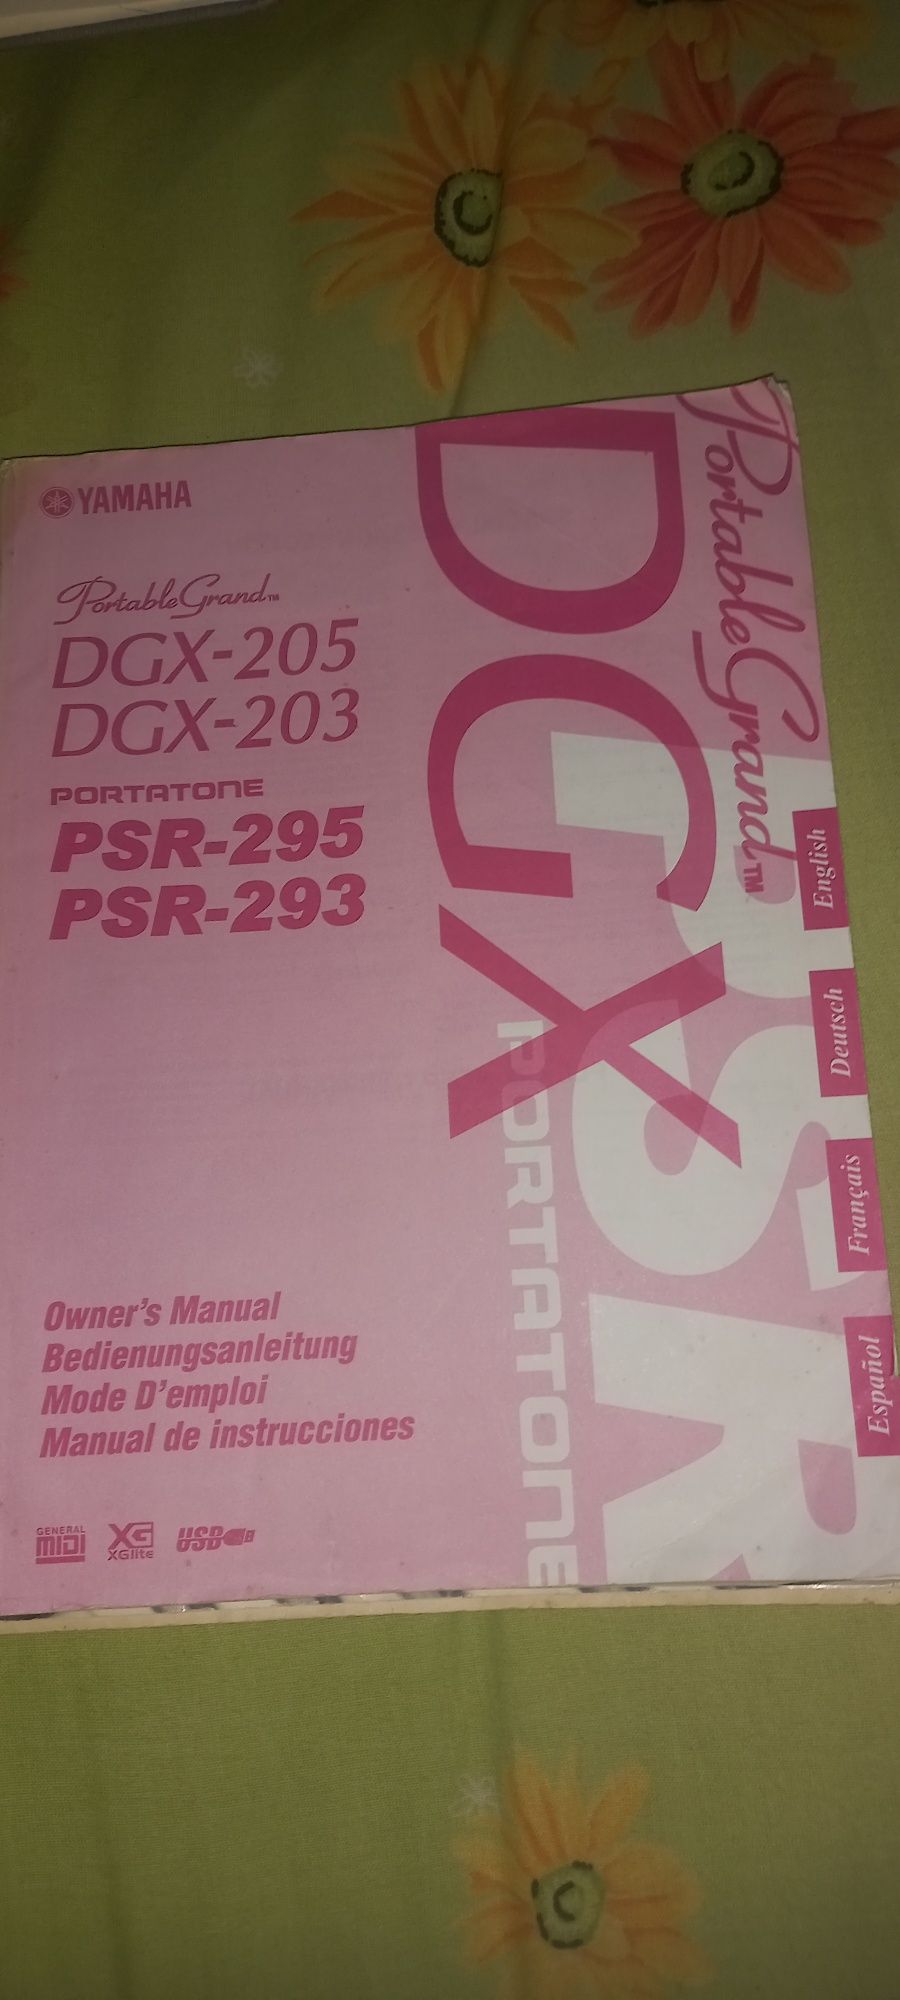 Manual de utilizare Yamaha DGX 203-205, Psr  293- 295